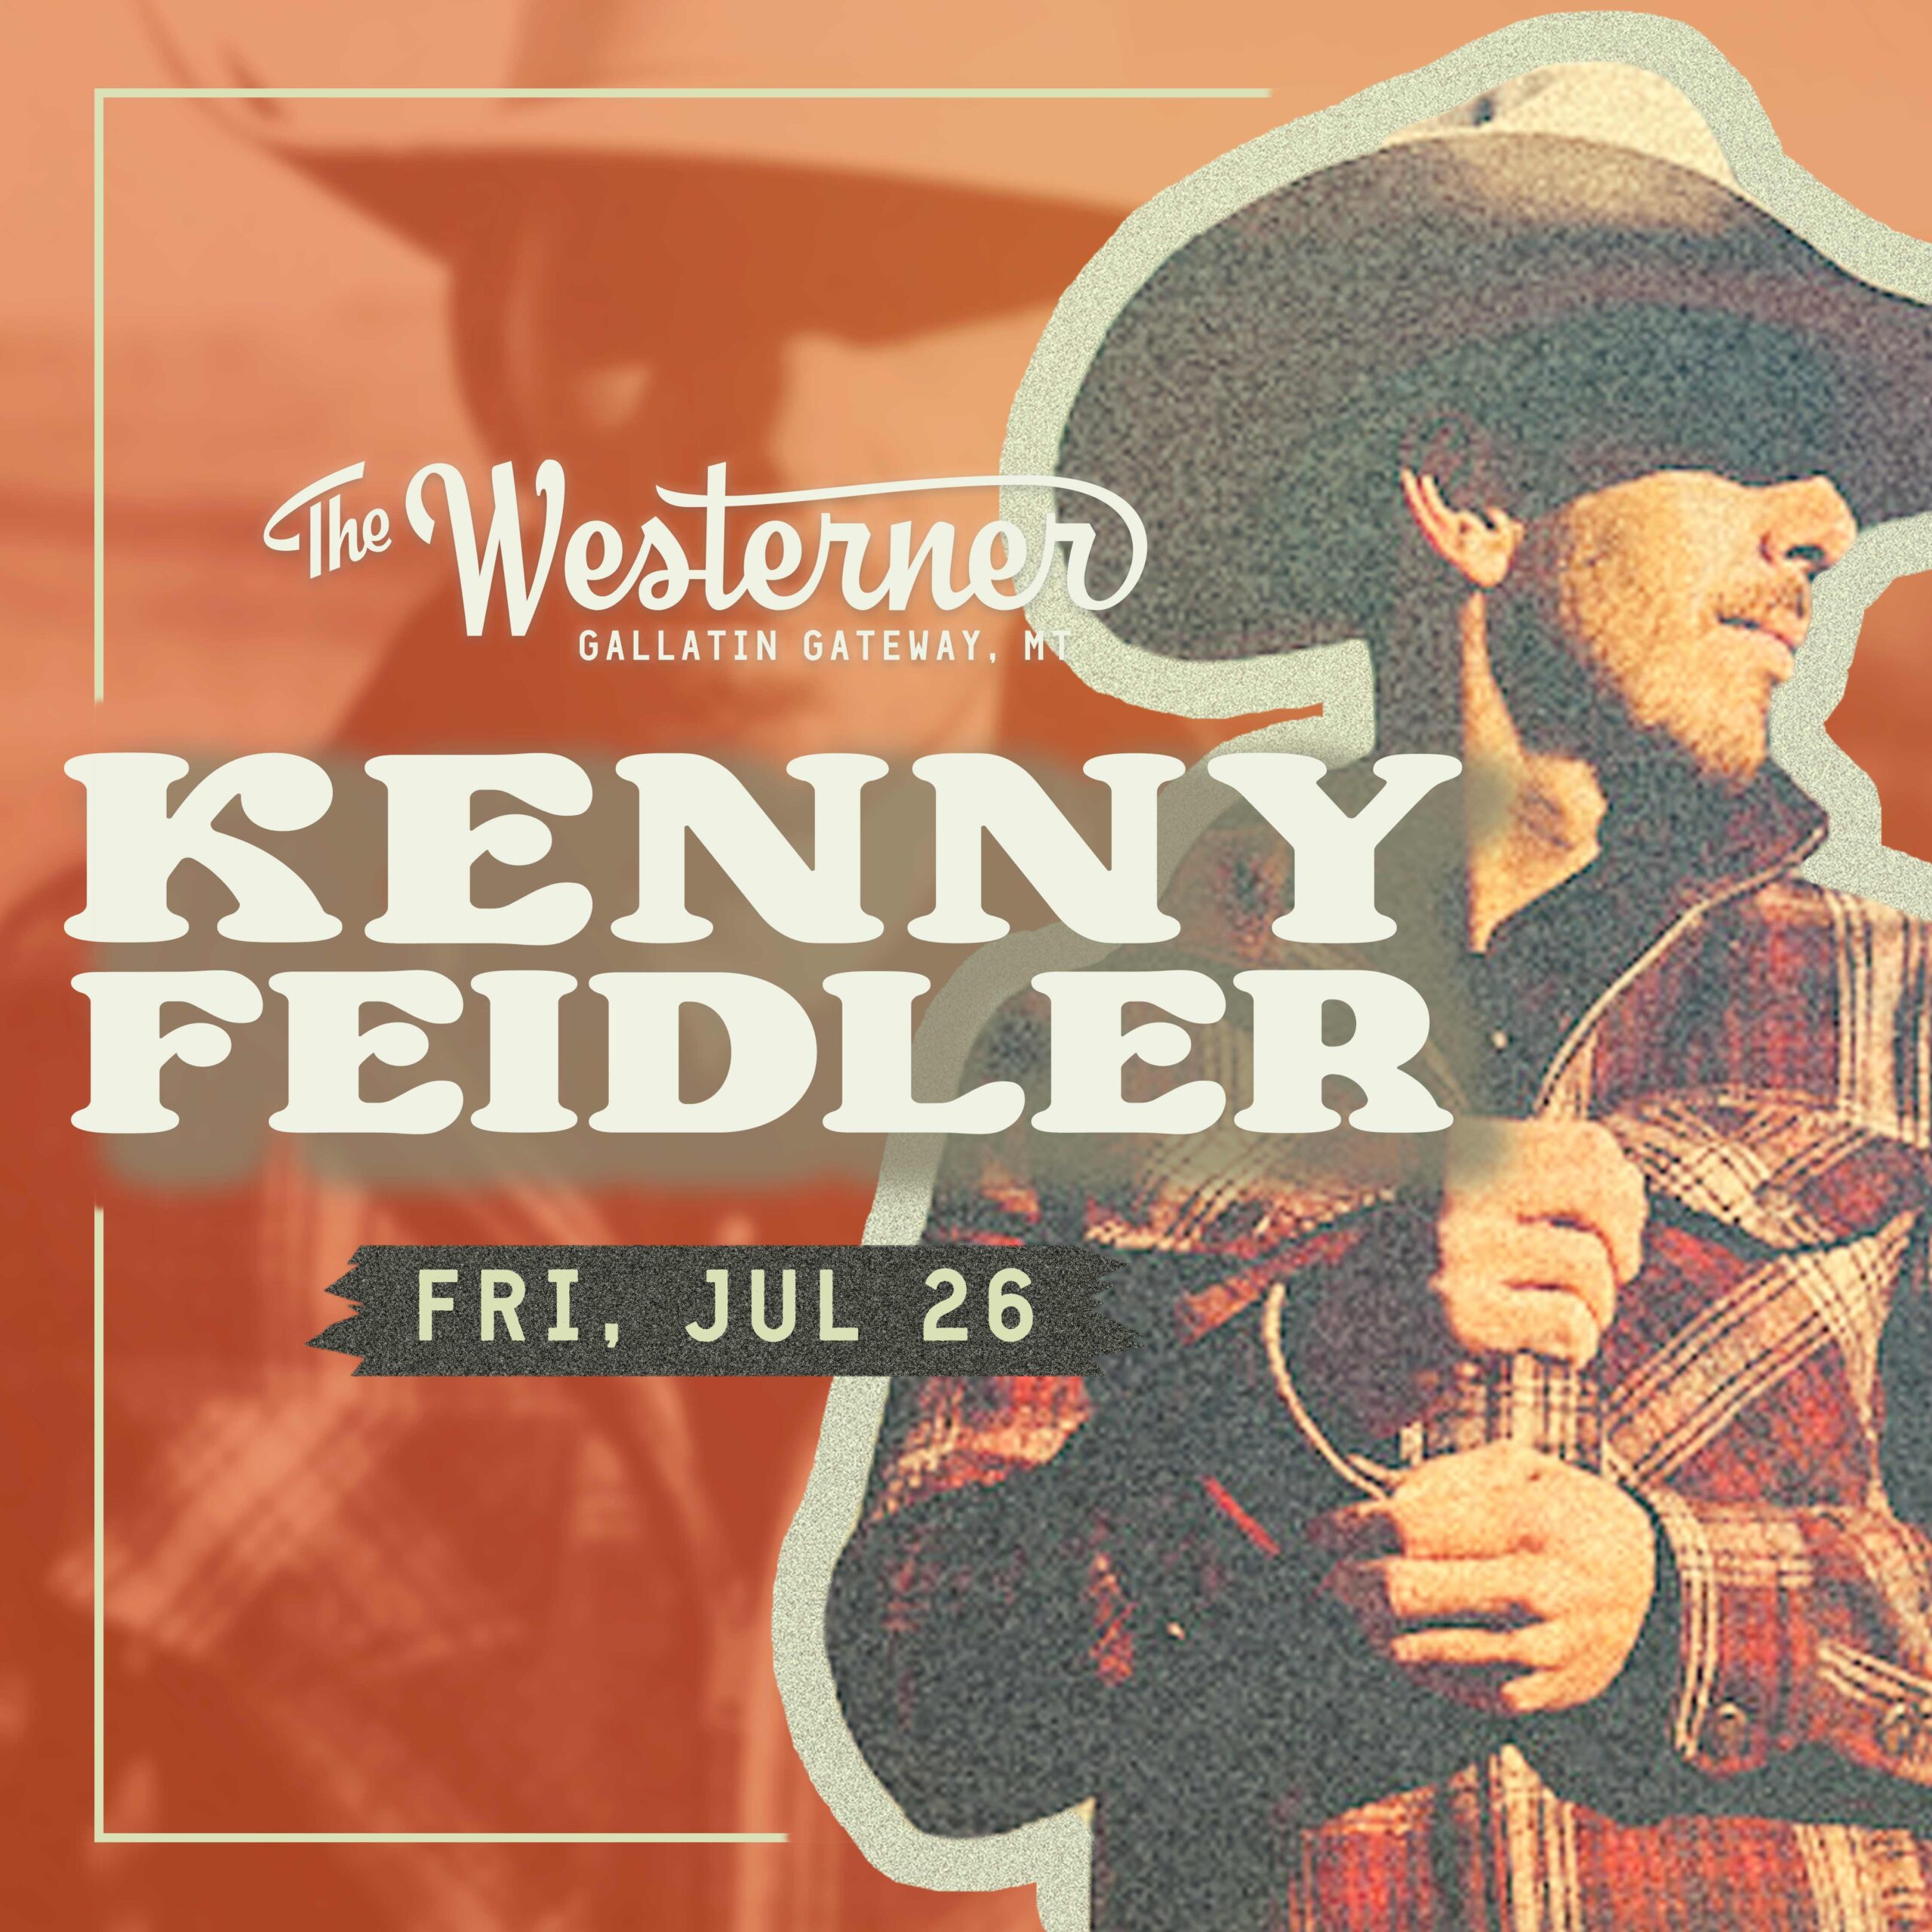 Kenny Feidler & The Cowboy Killers